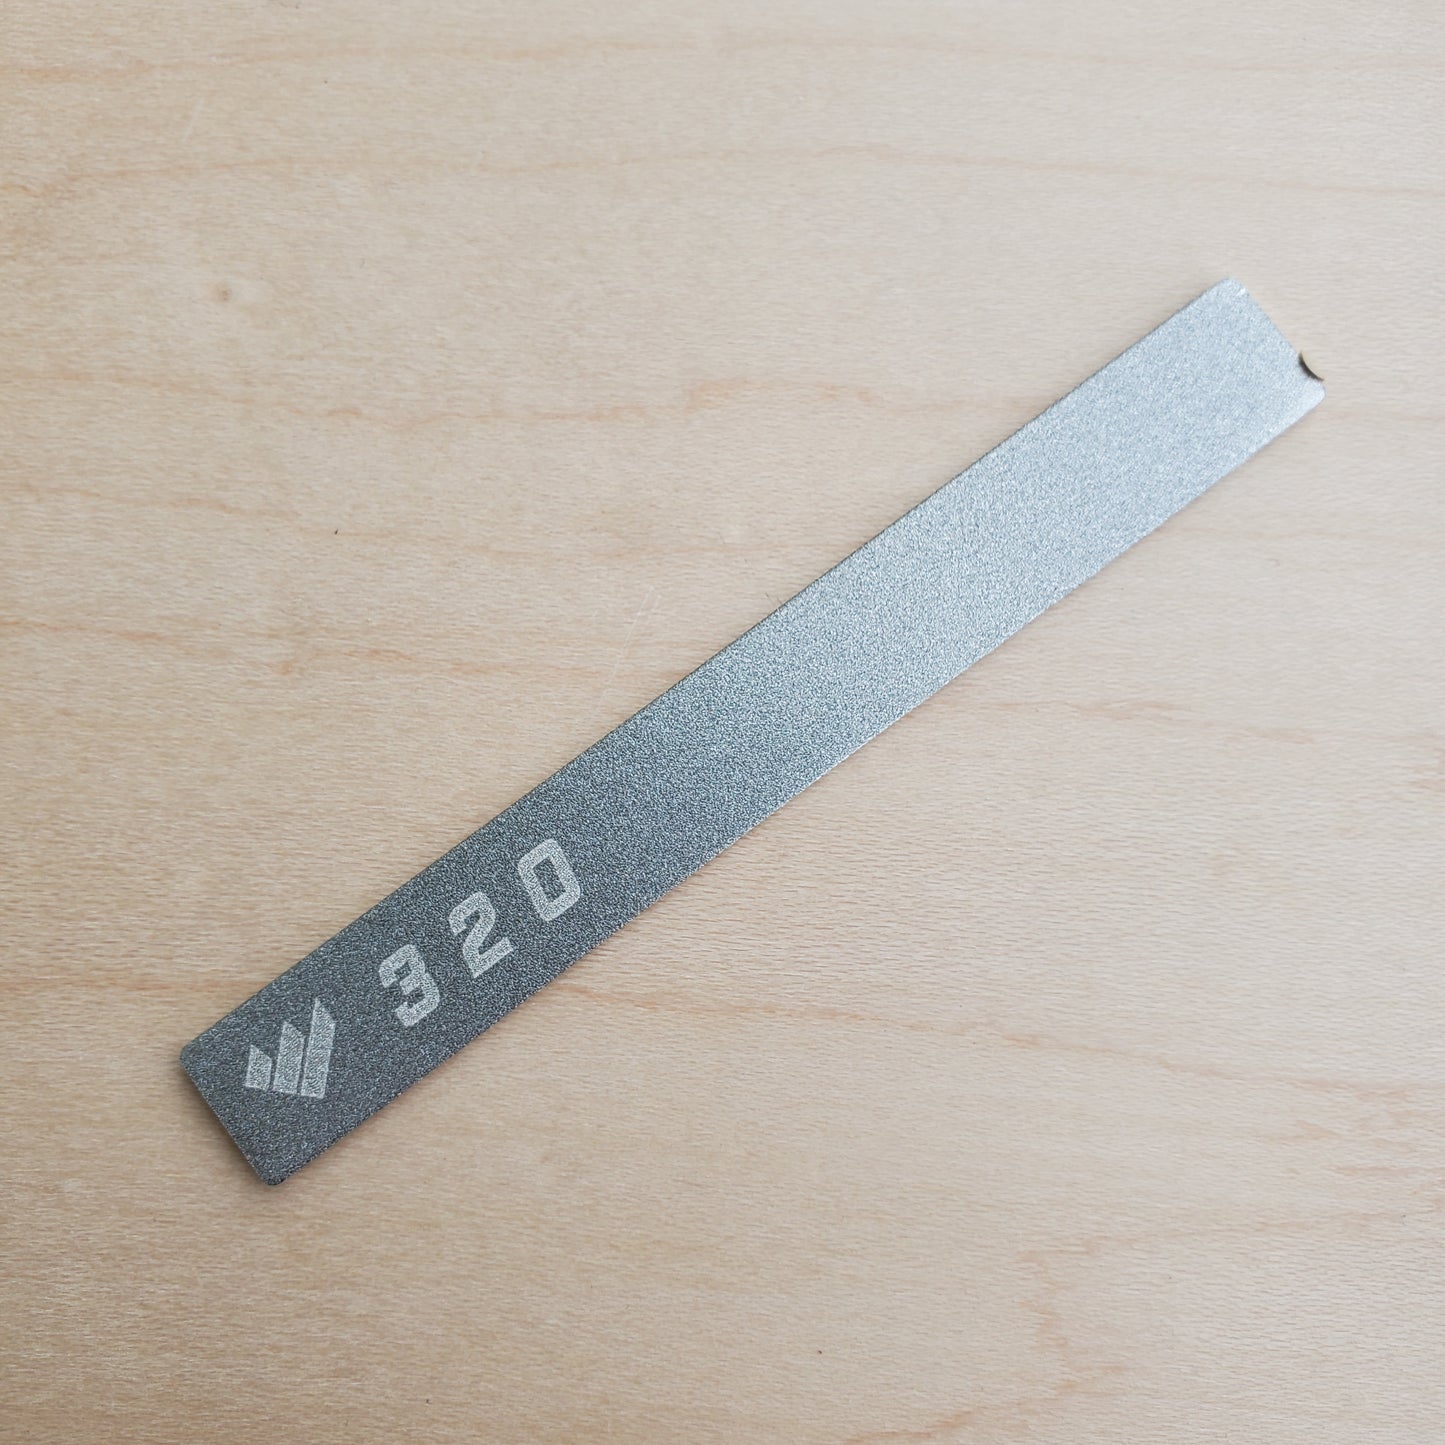 Work Sharp #320 Grit Diamond Plate Replacement for Precision Adjust Knife Sharpener